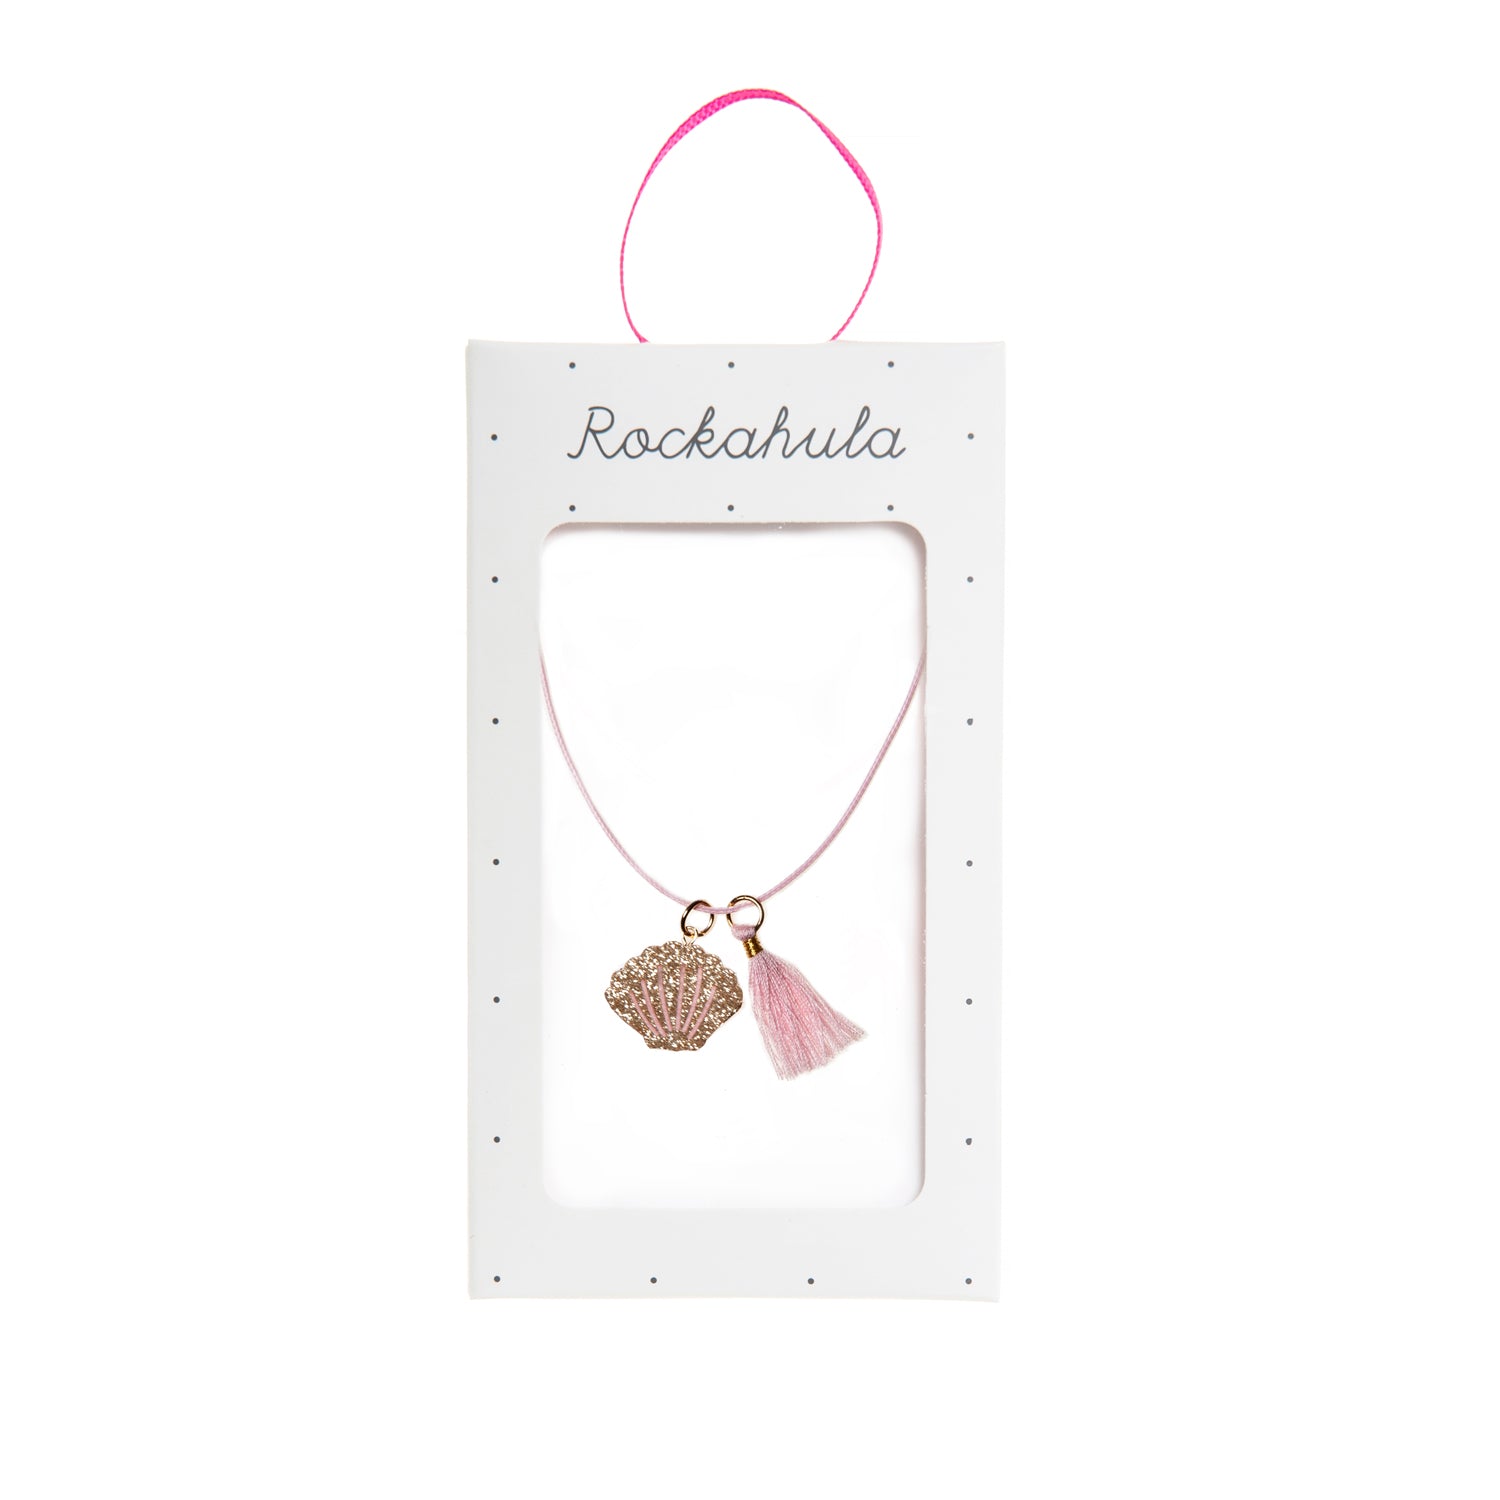 Rockahula Seashell Necklace Set